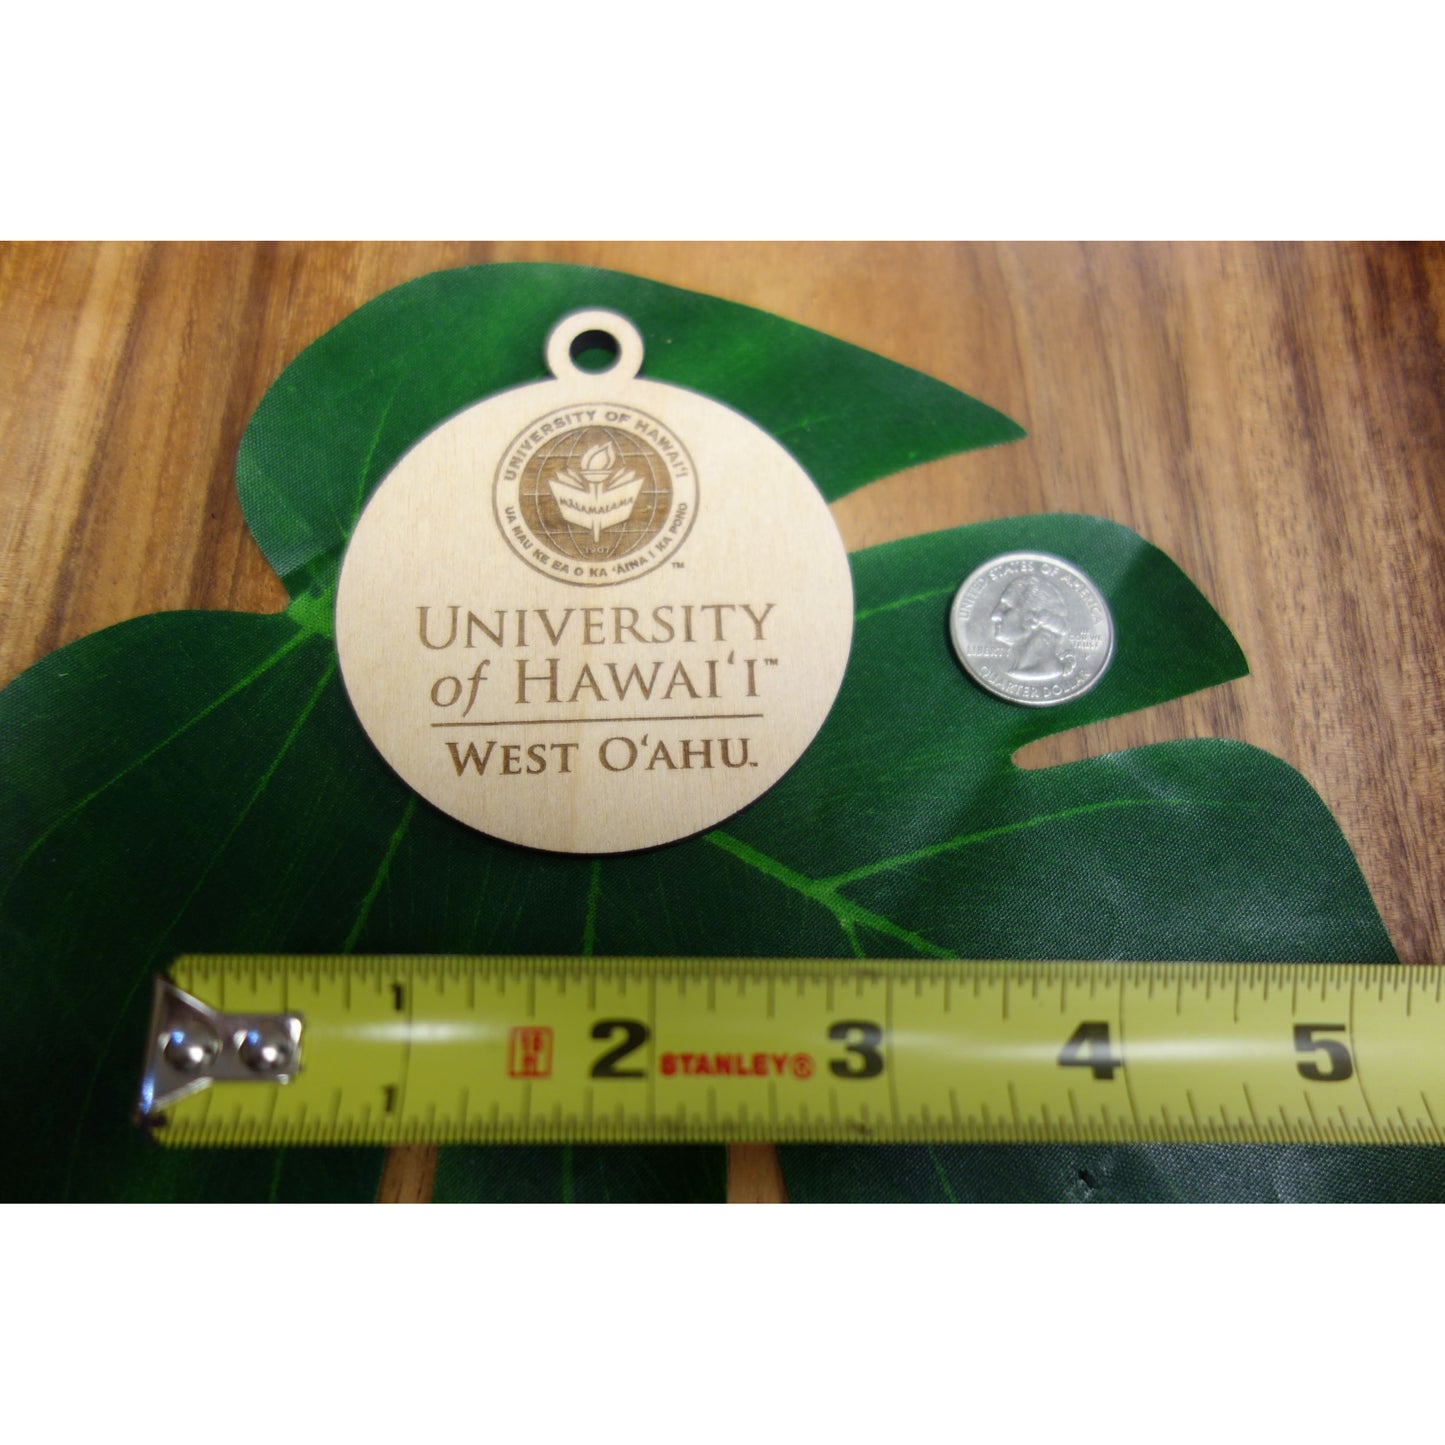 Officially Licensed University of Hawaii West Oahu Keepsake Ornament